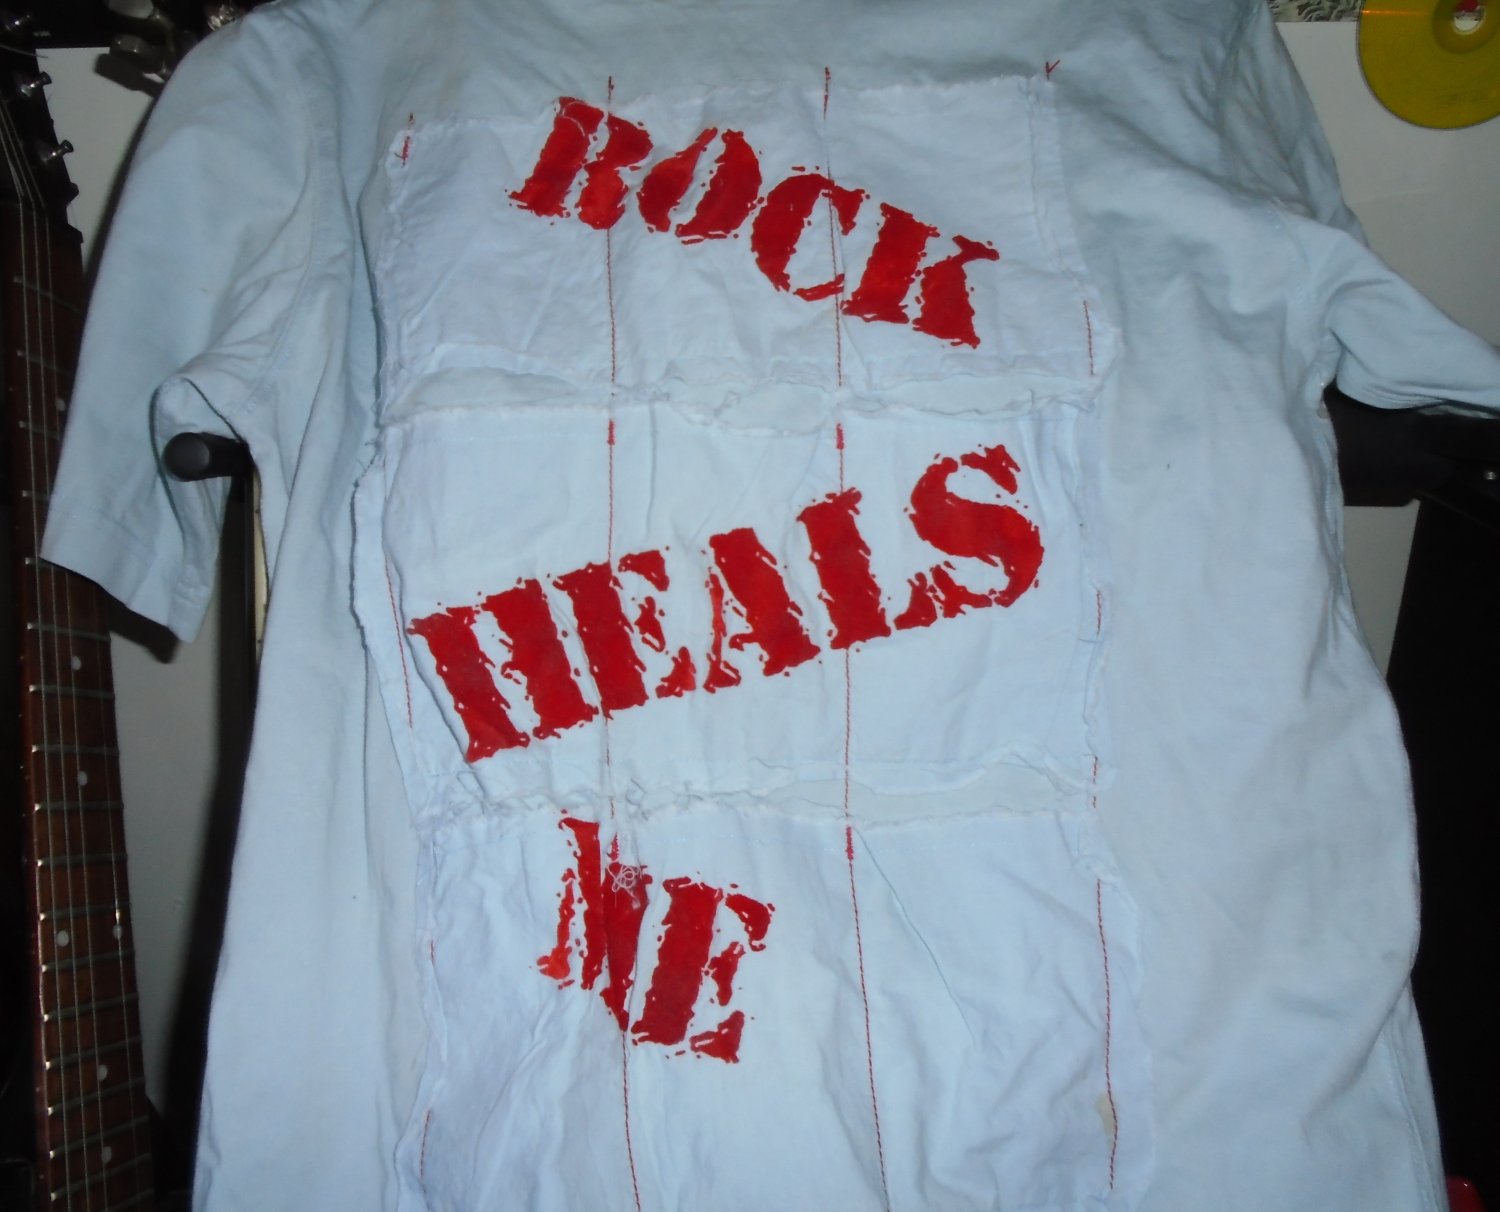 rock heals me discontinued religious spiritual L 9 pocket tee - jesus love